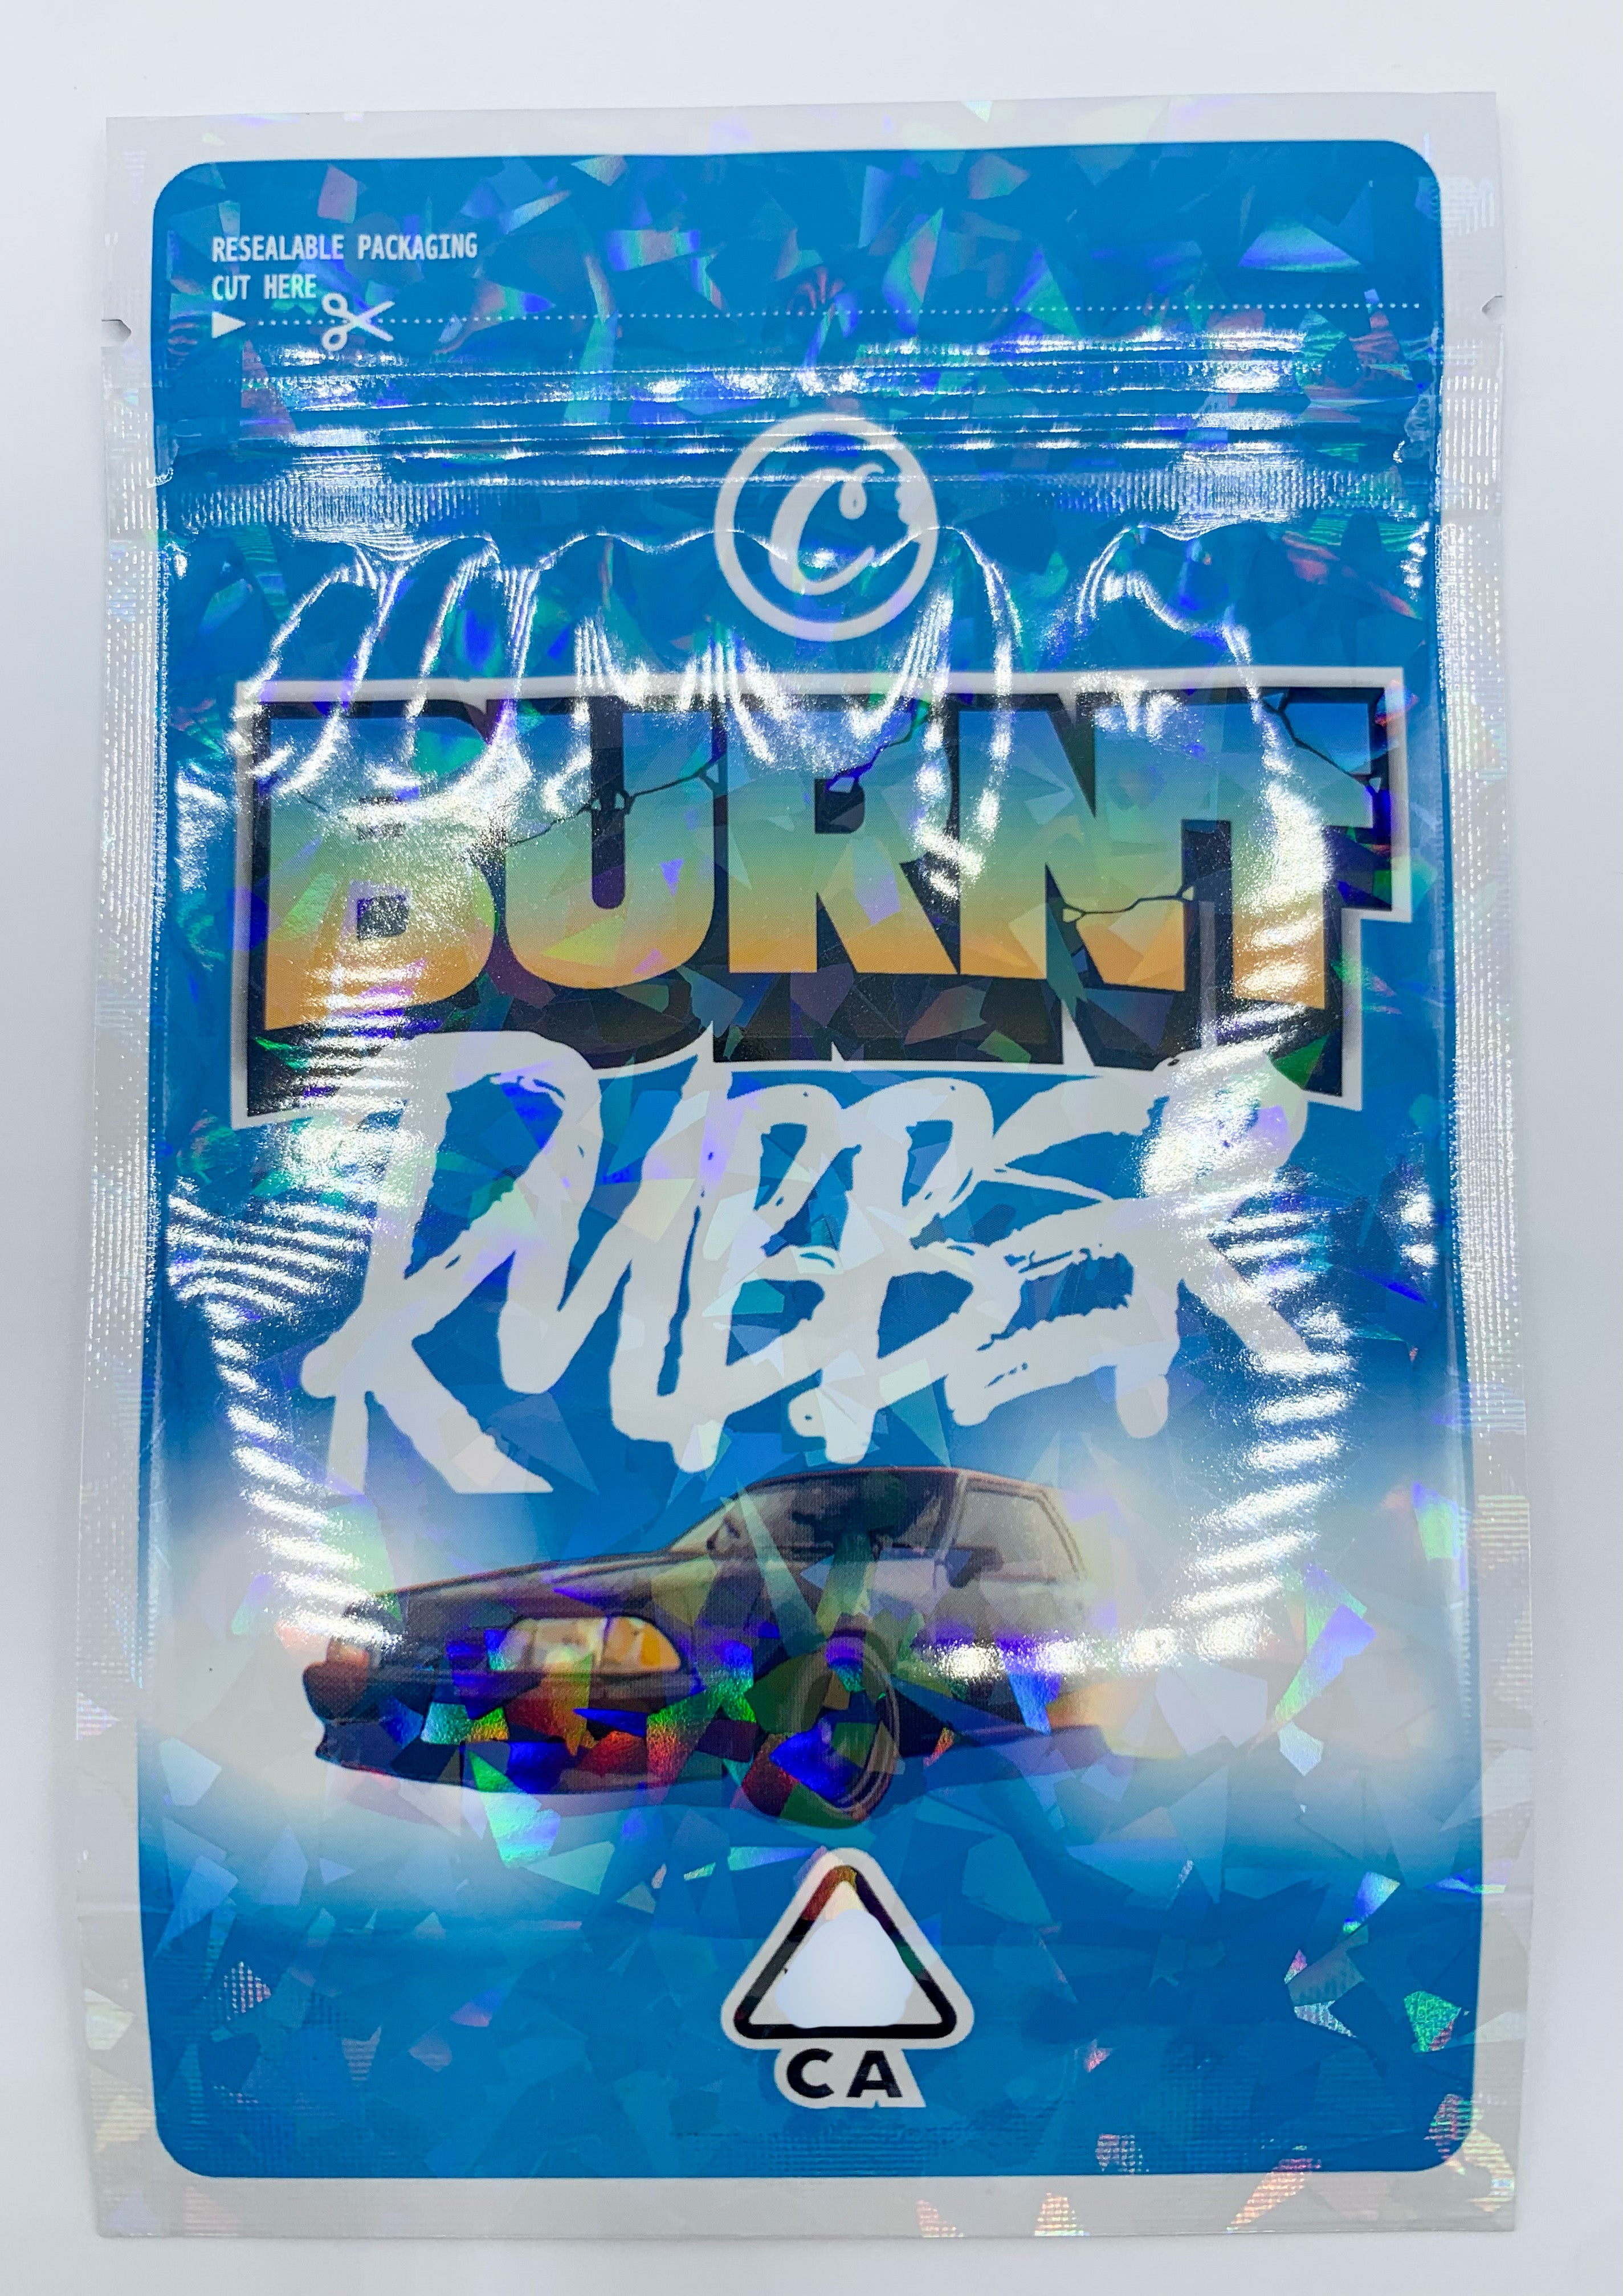 Cookies Burnt Rubber 3.5G Mylar bags